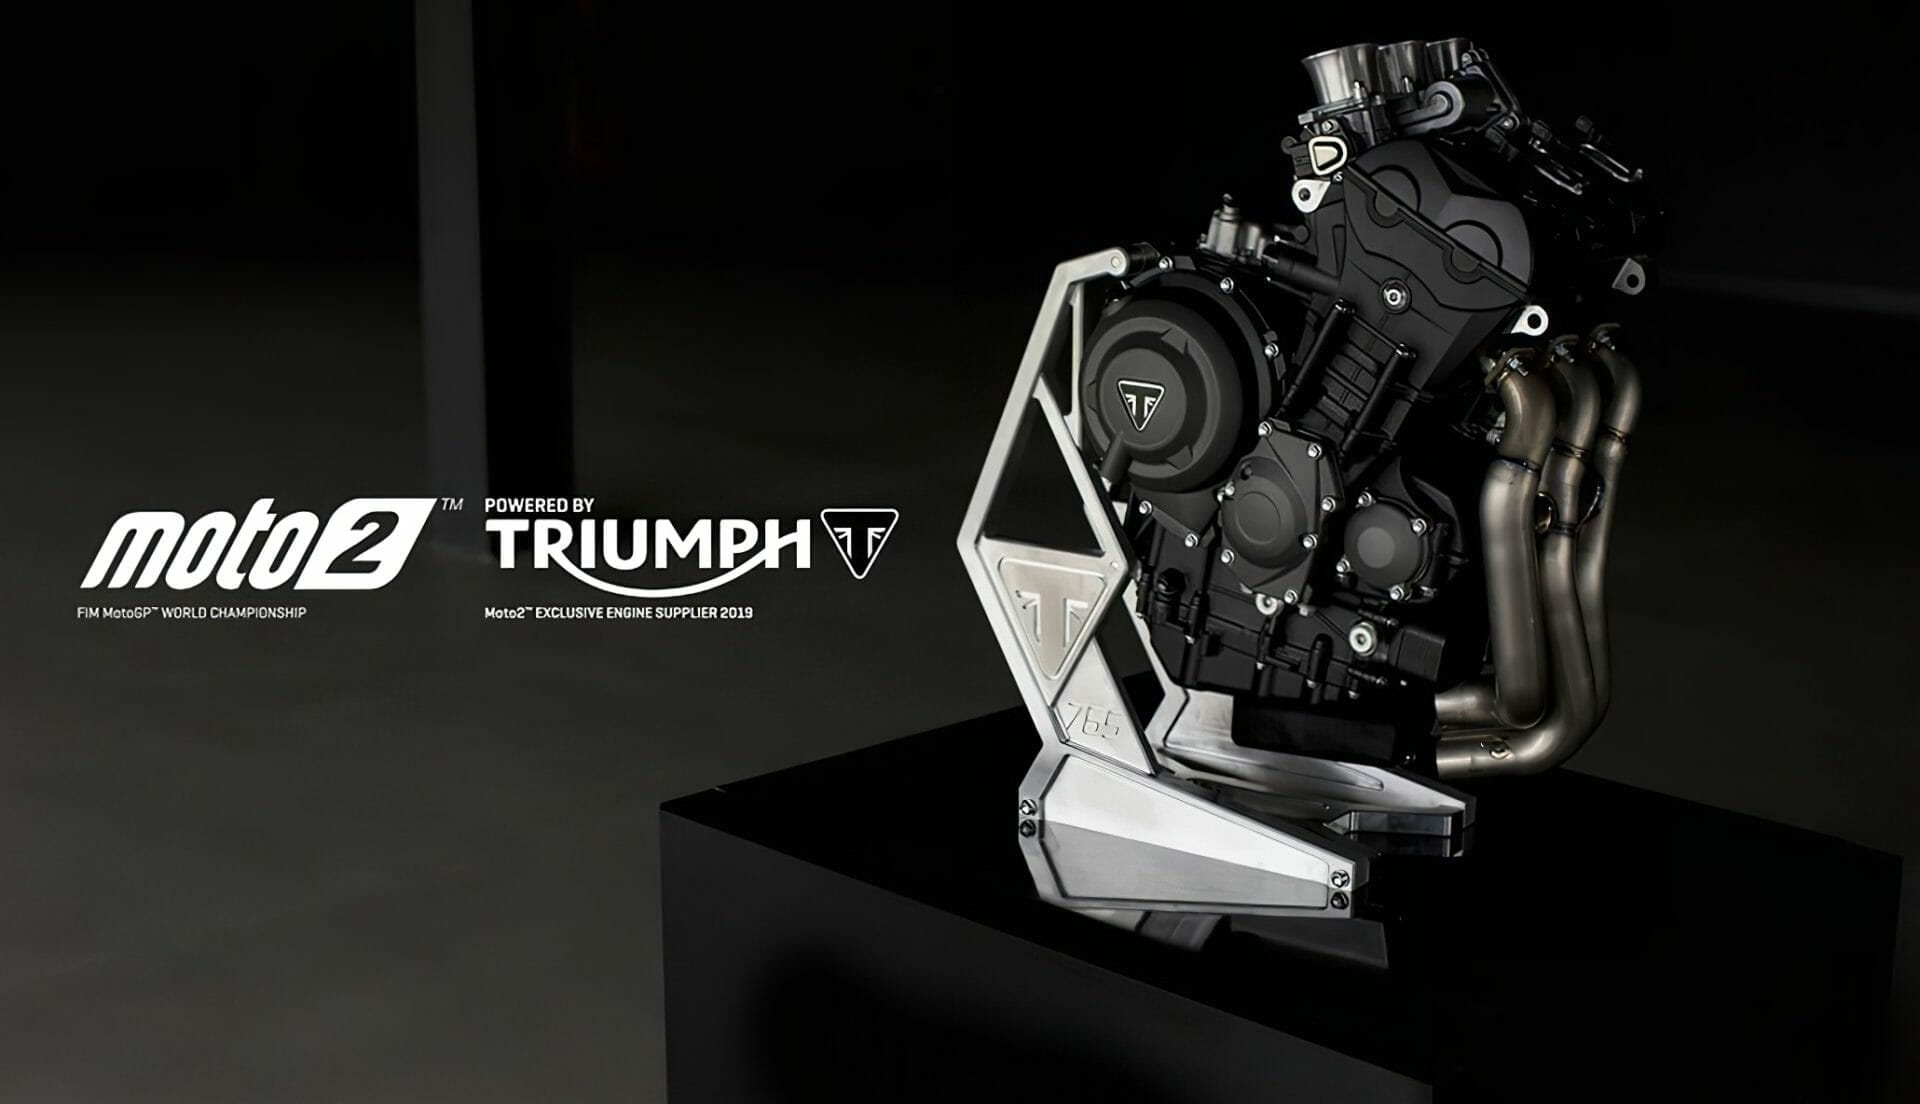 Triumph and Dorna extend their partnership until 2029